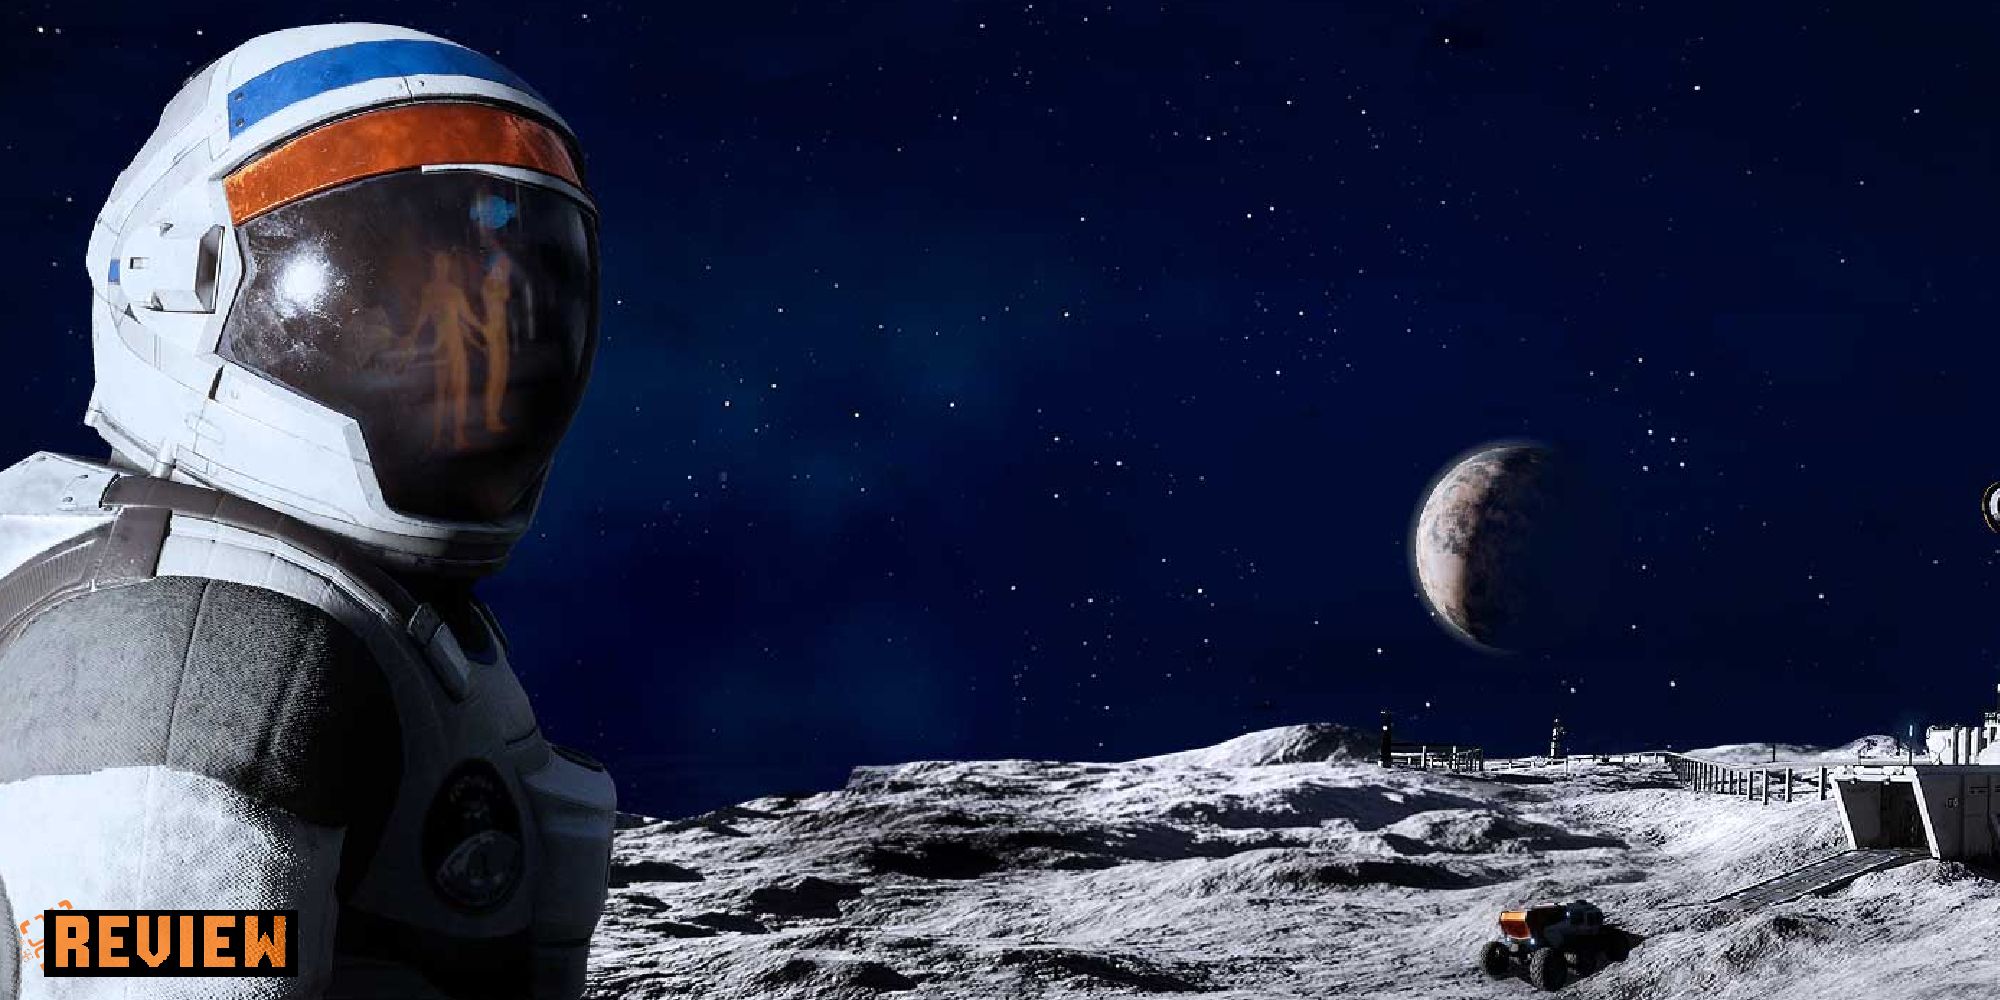 an astronaut on the moon looks at a dusty Earth